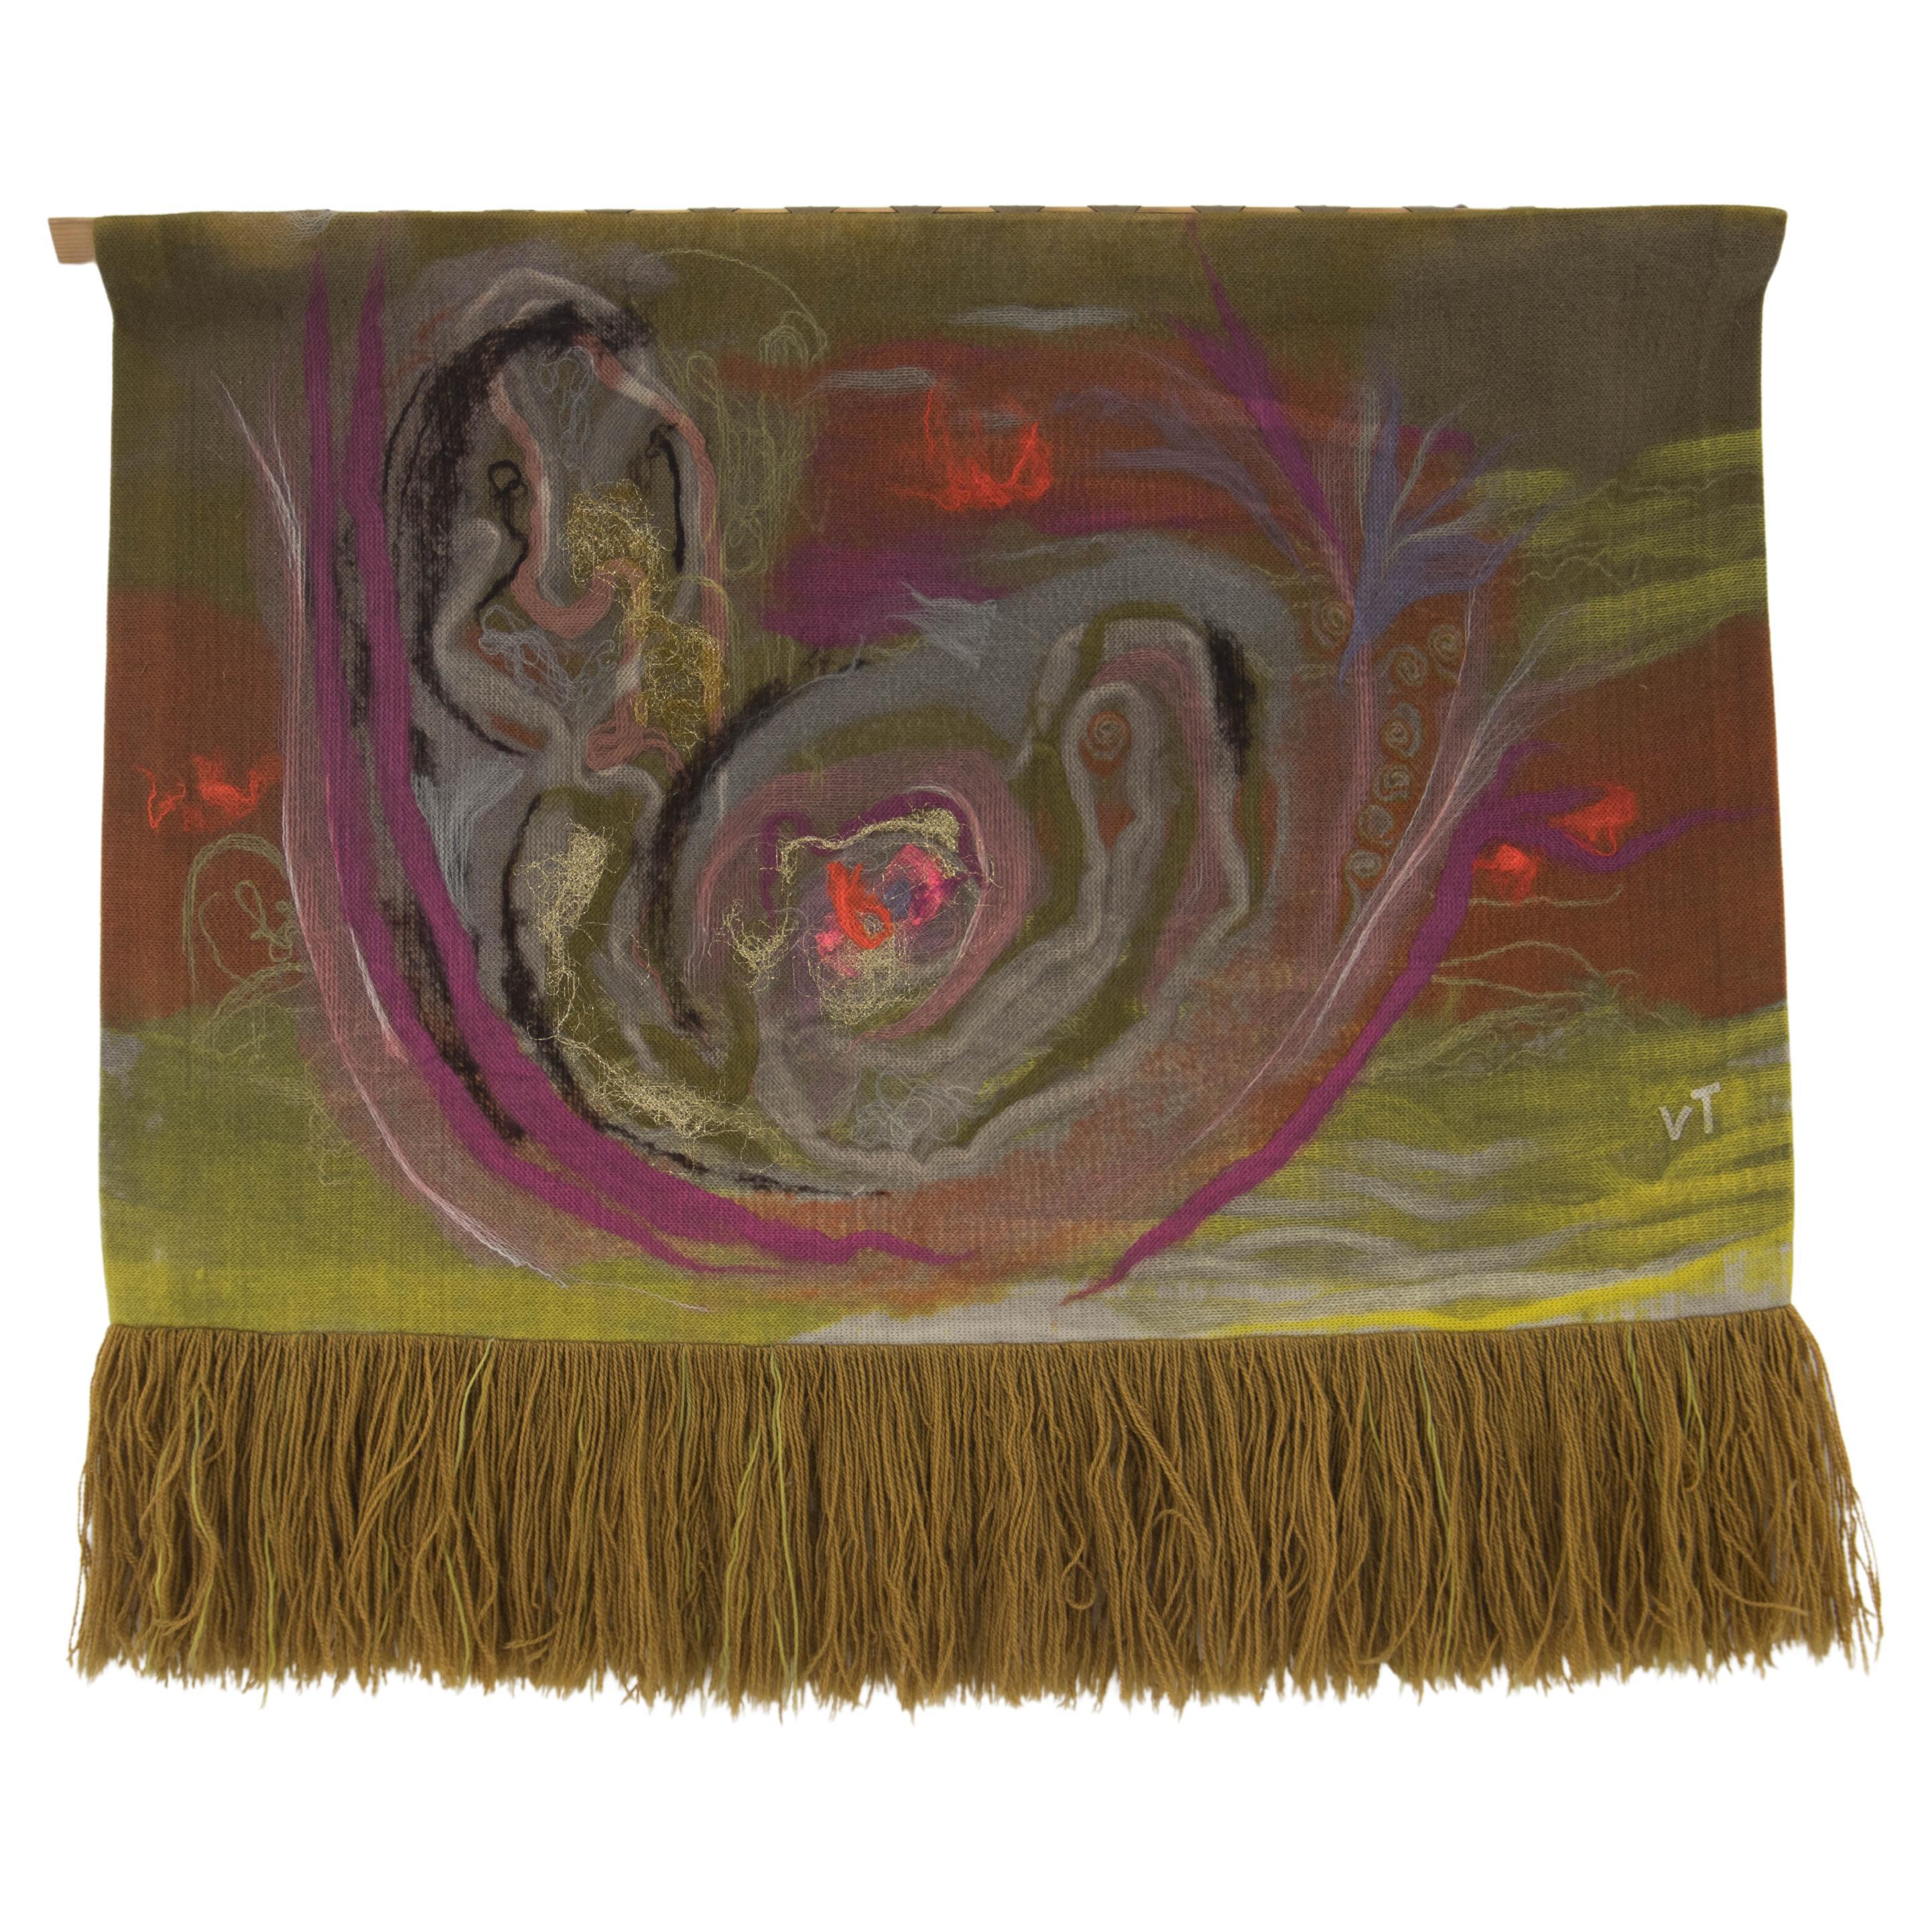 Art Wool Tapestry "Tropical Summer" by Věra Tošenovská, 1974